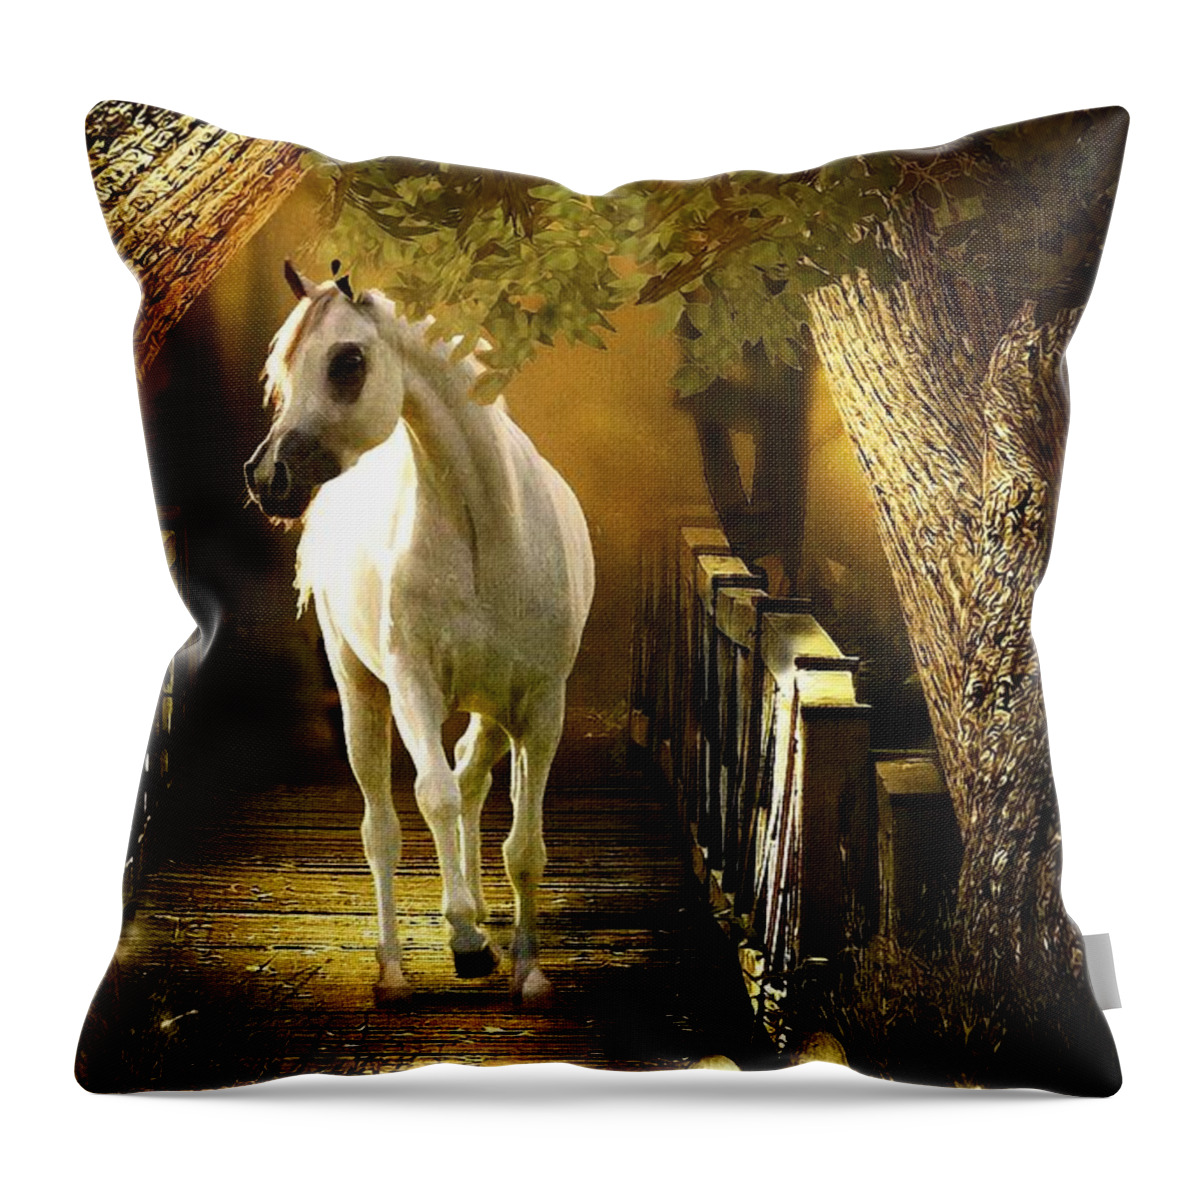 Animal Throw Pillow featuring the digital art Arabian Dream by Davandra Cribbie